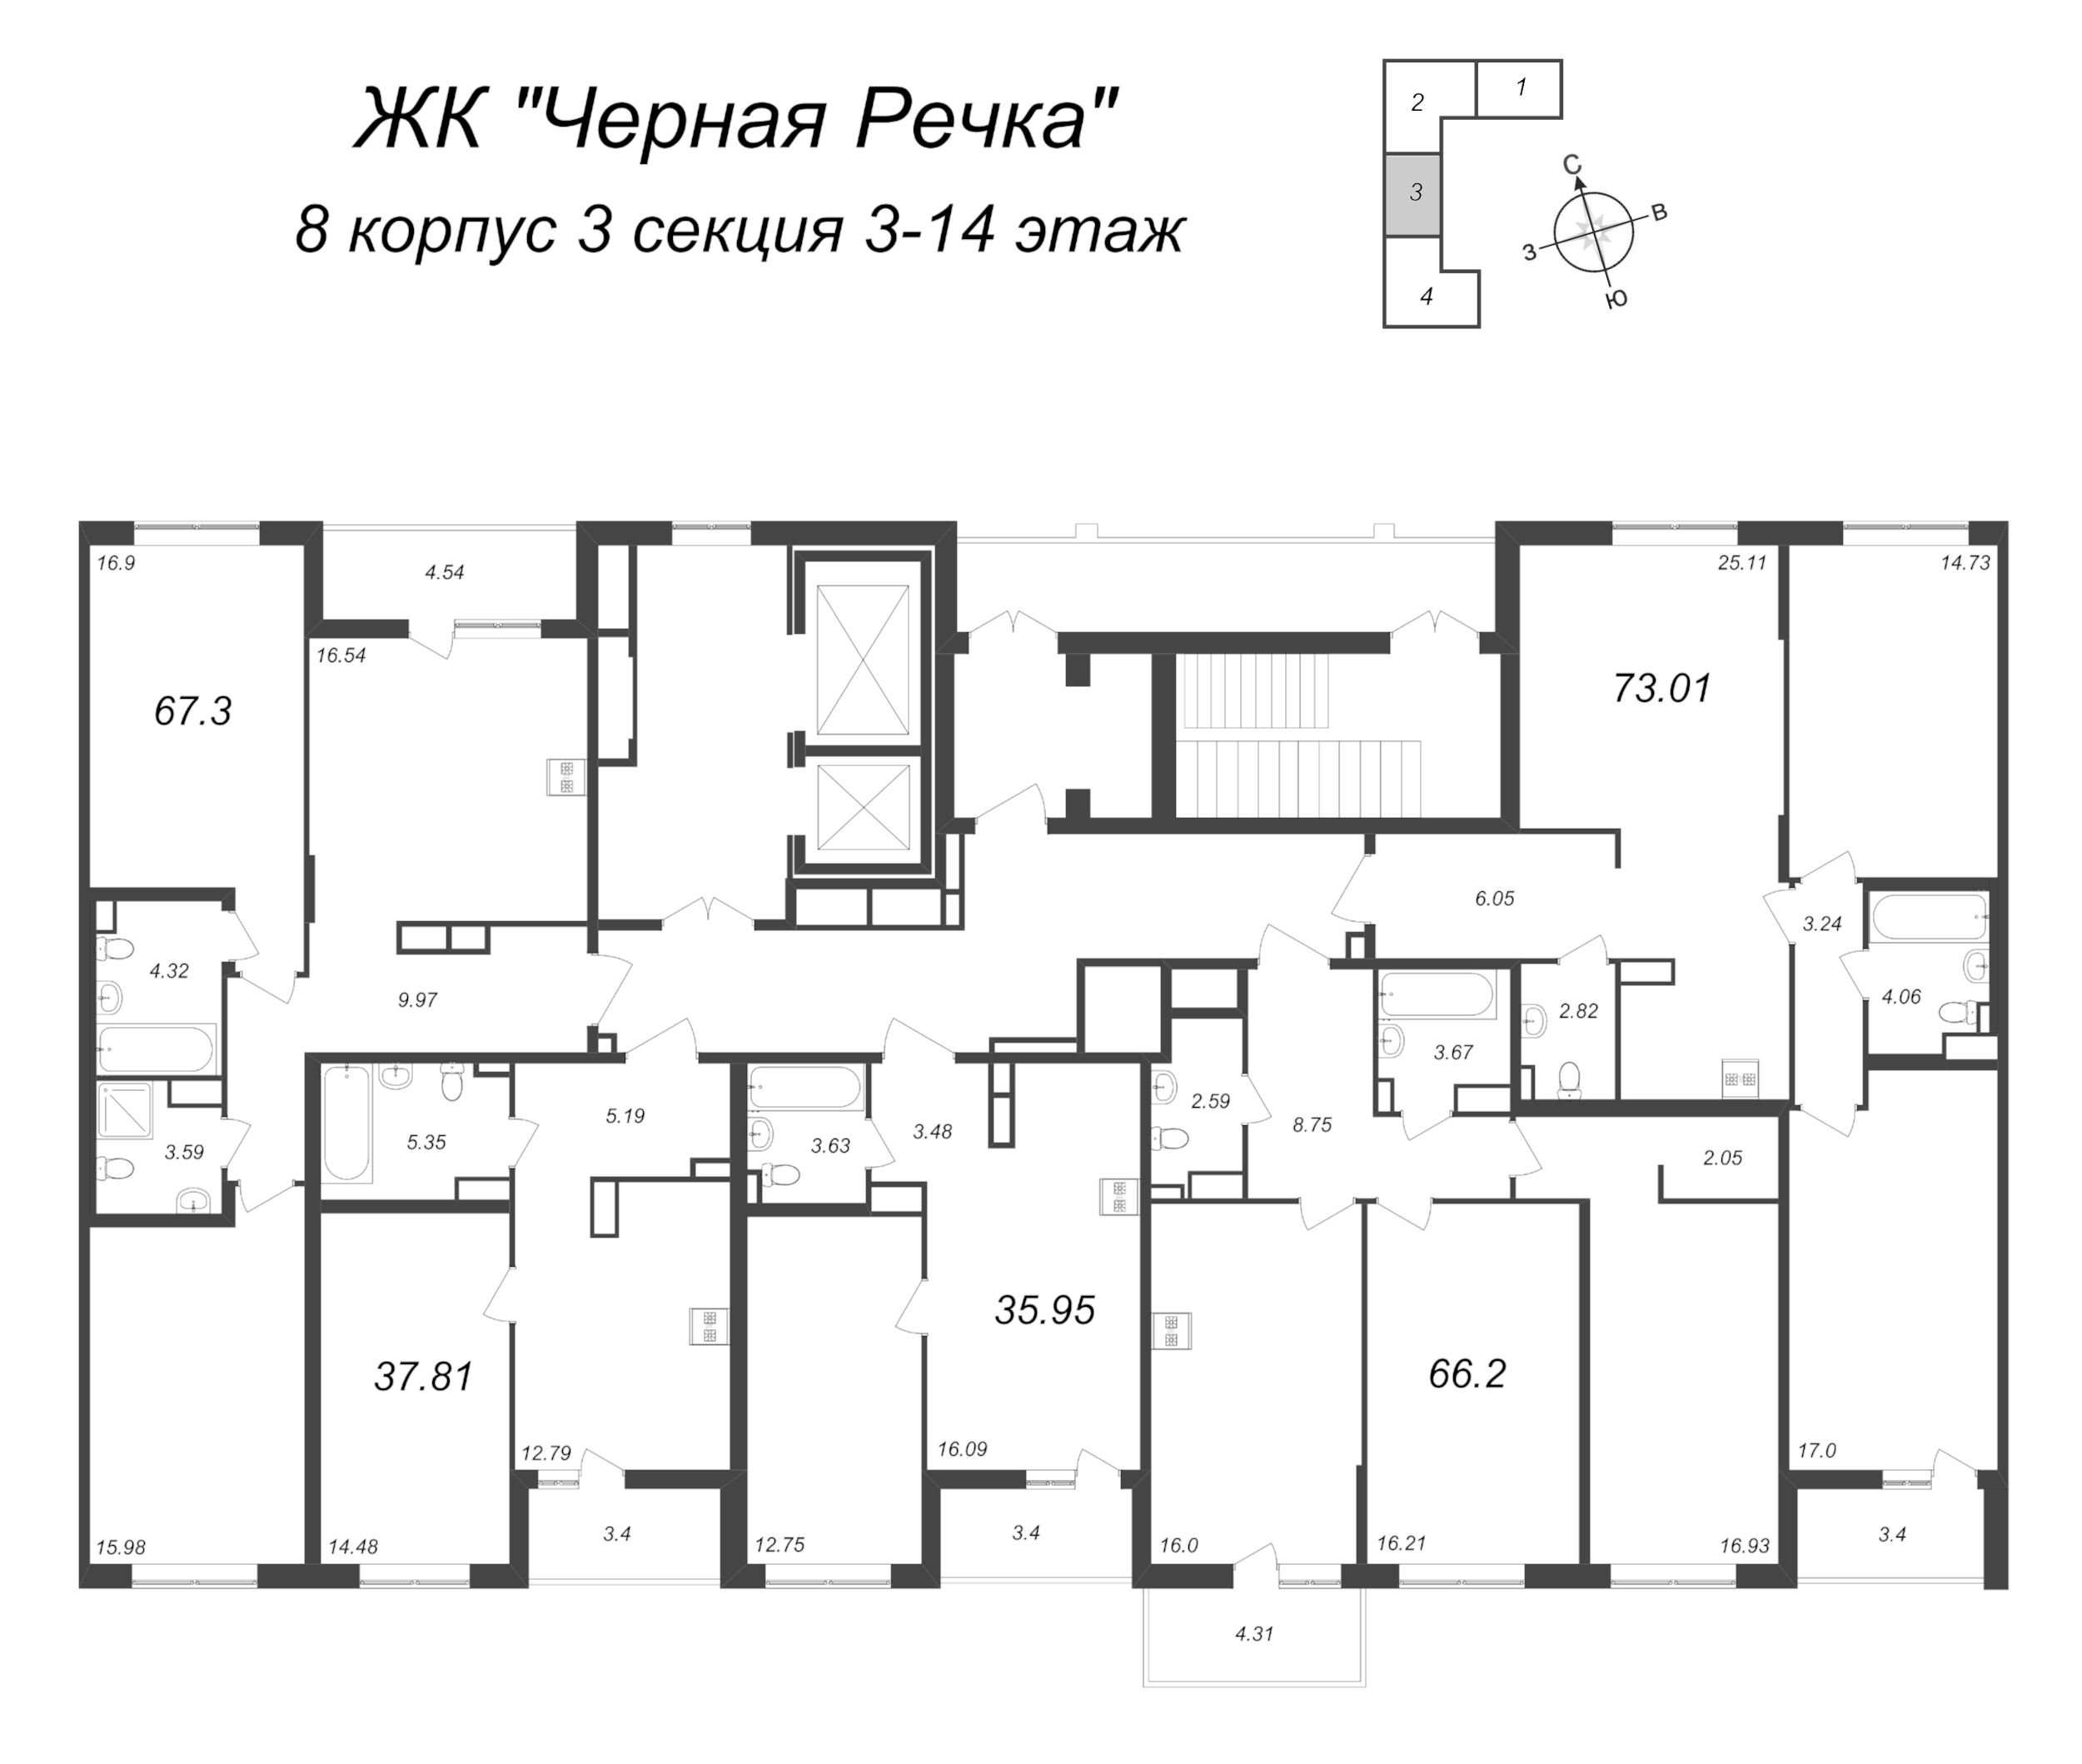 3-комнатная (Евро) квартира, 66.2 м² - планировка этажа